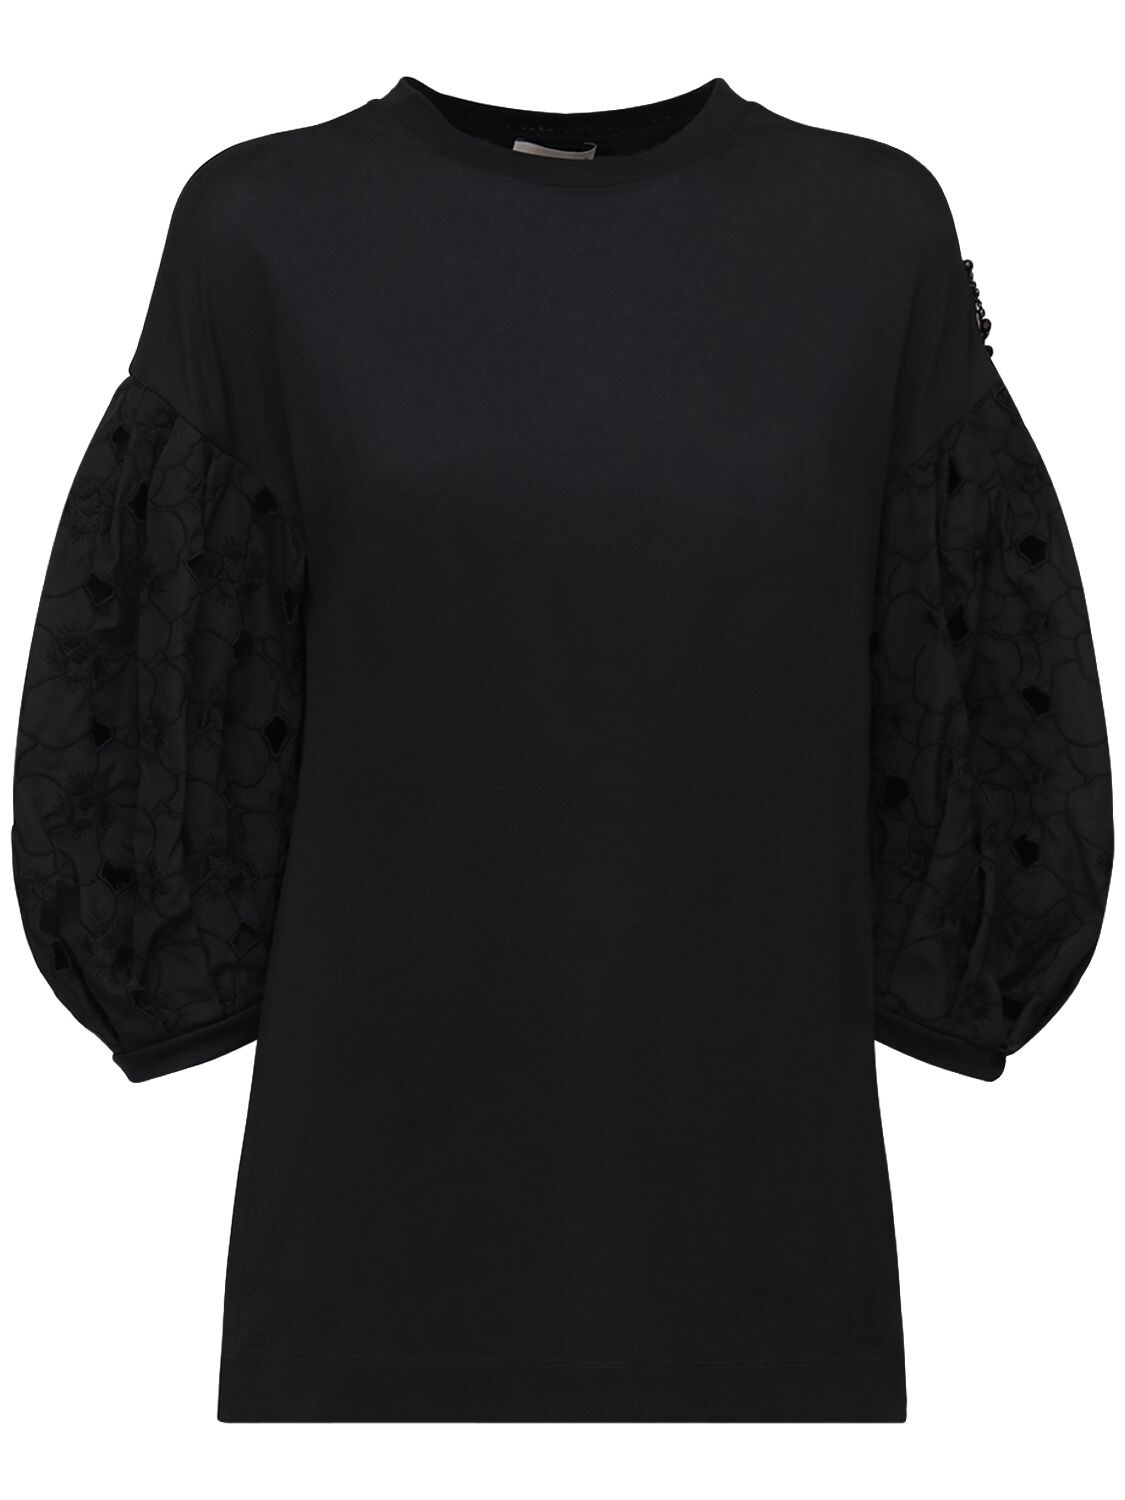 Moncler Genius Simone Rocha T-shirt W/ Embroidery In Black